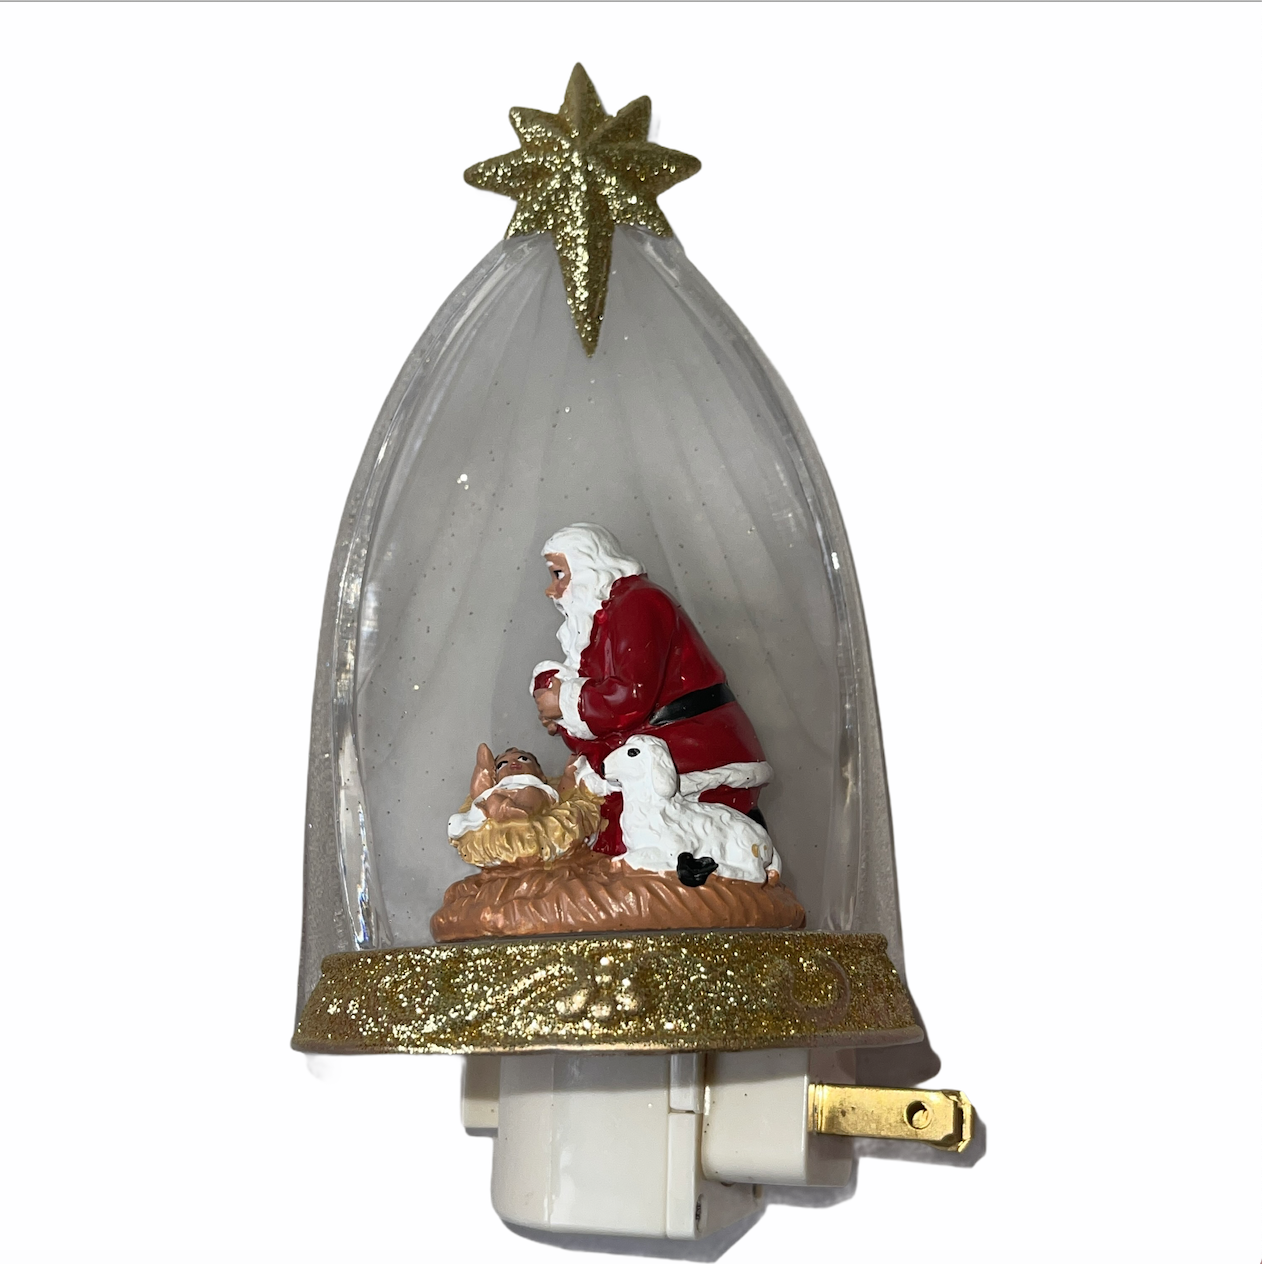 Santa Claus Kneeling Before Baby Jesus in Manger Night Light, 6 In New Open Box - $24.99